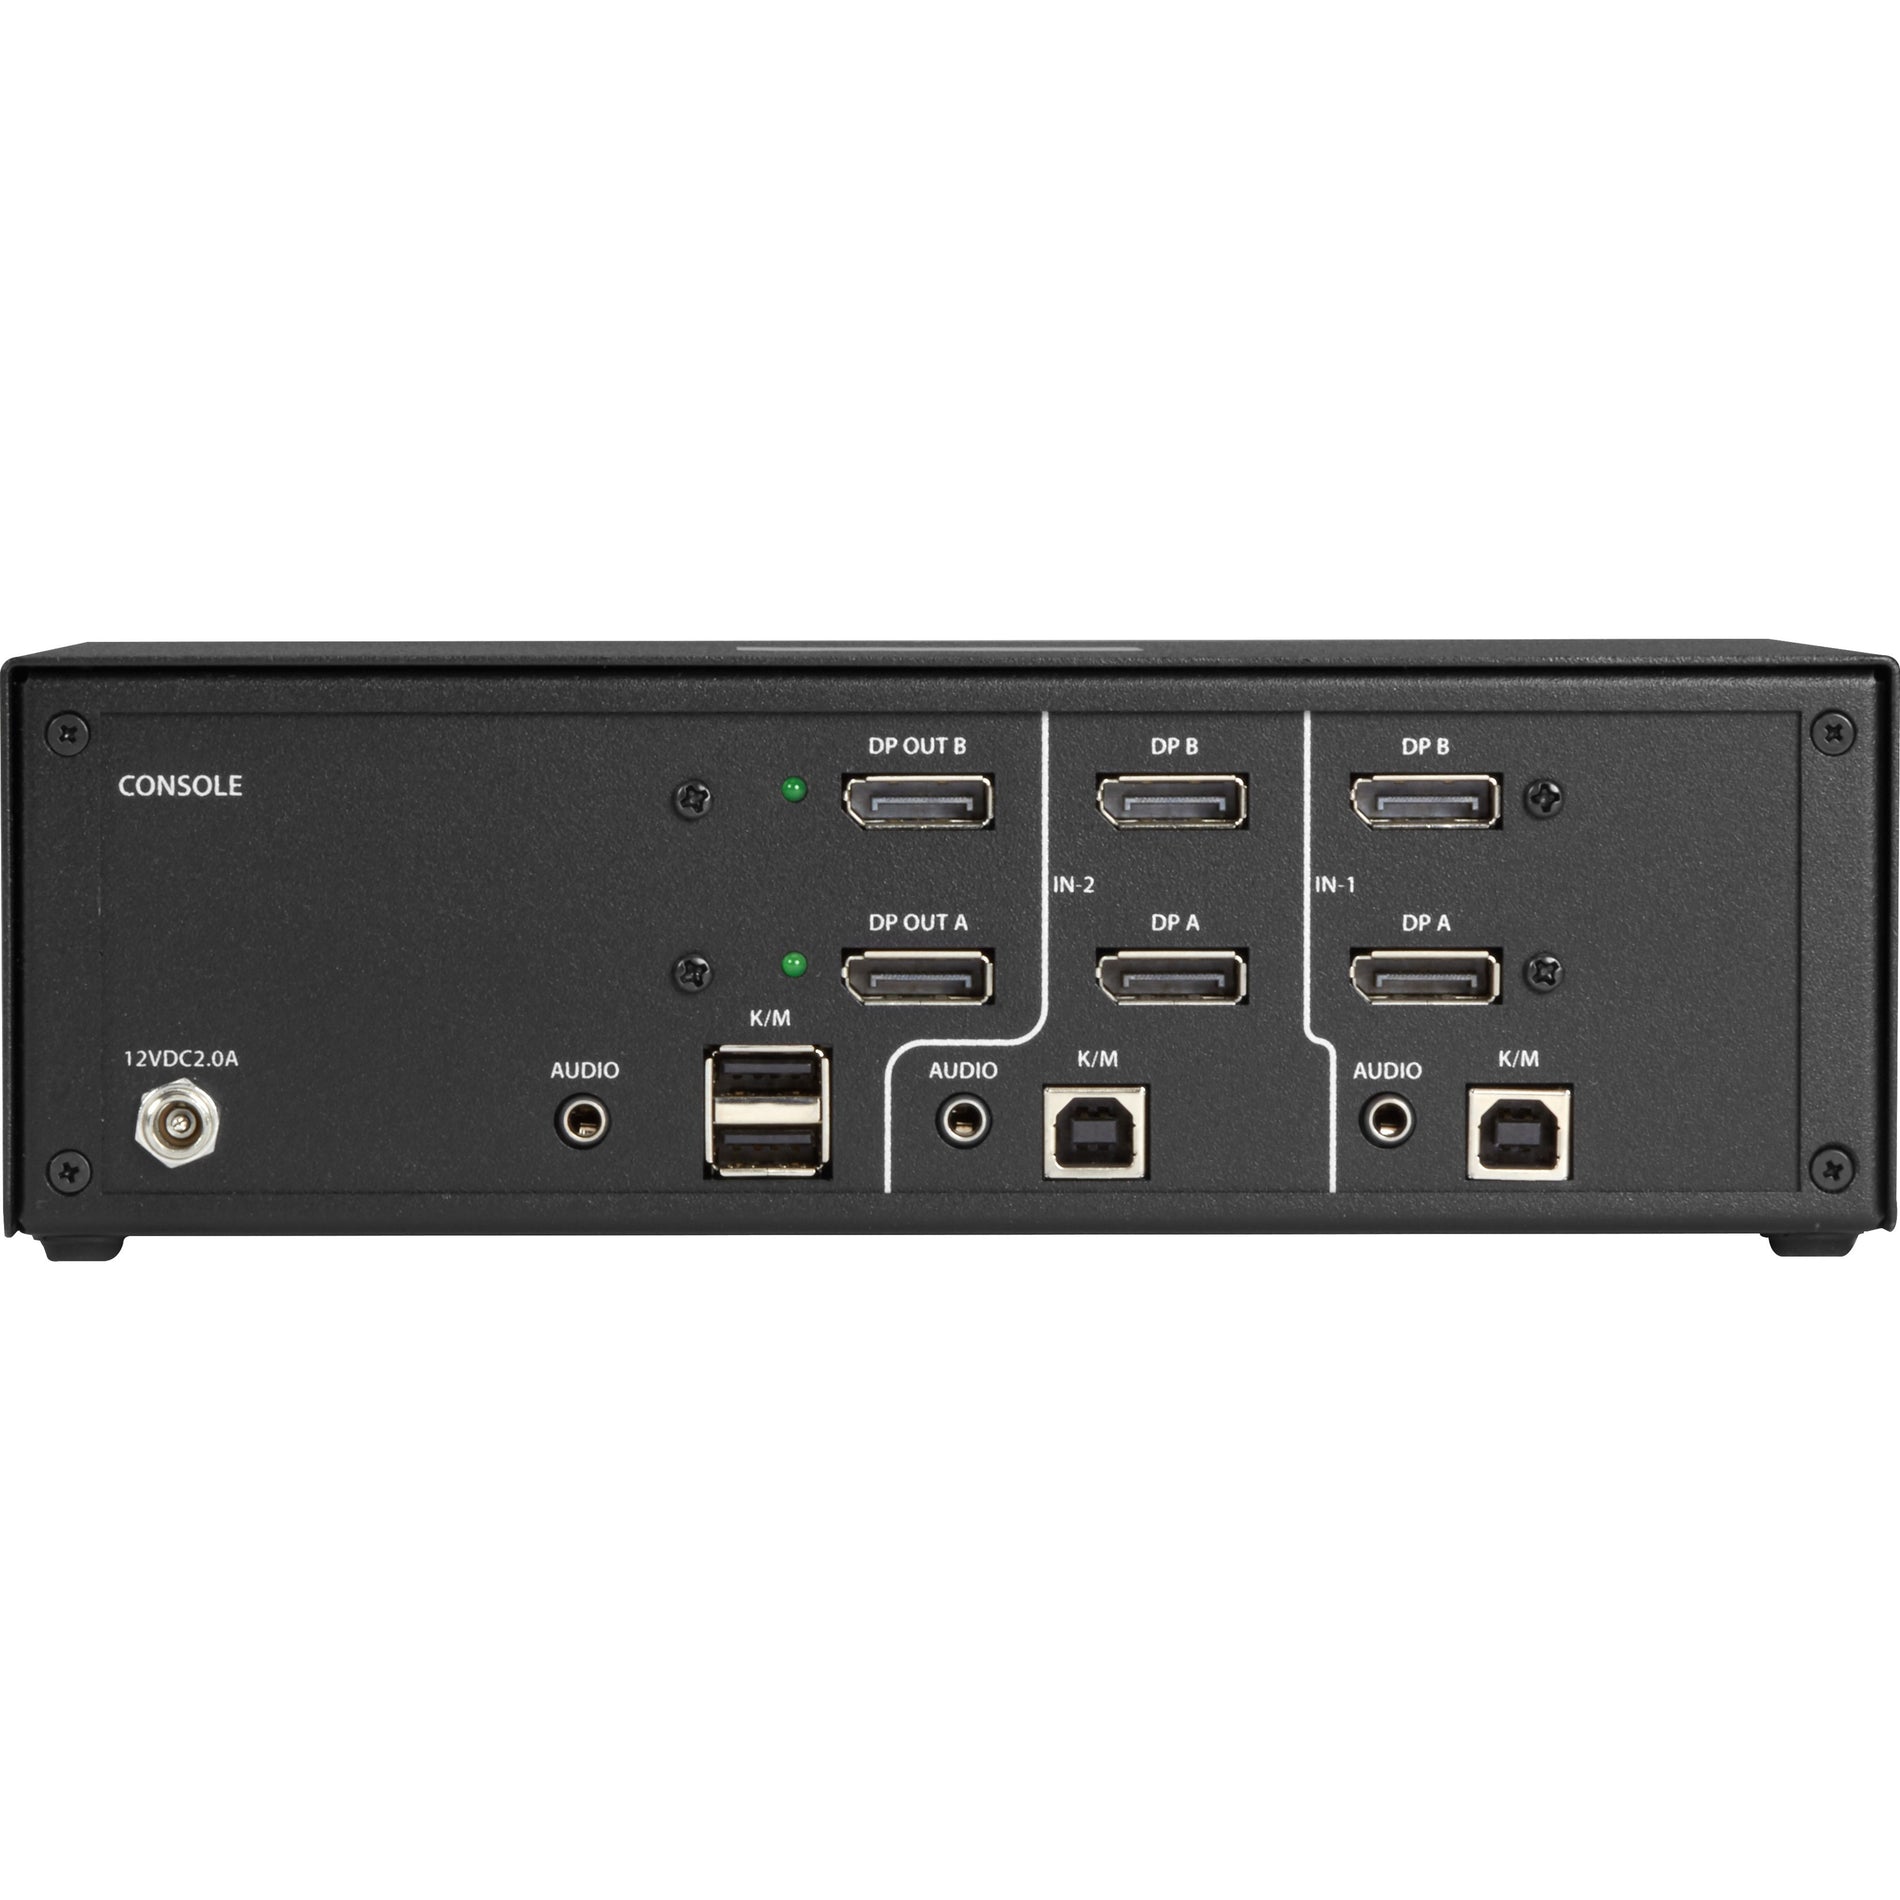 María Caja SS2P-DH-DP-U NIAP 3.0 Seguro 2-Port Dual-Head DisplayPort Conmutador KVM 4K Cumple con TAA